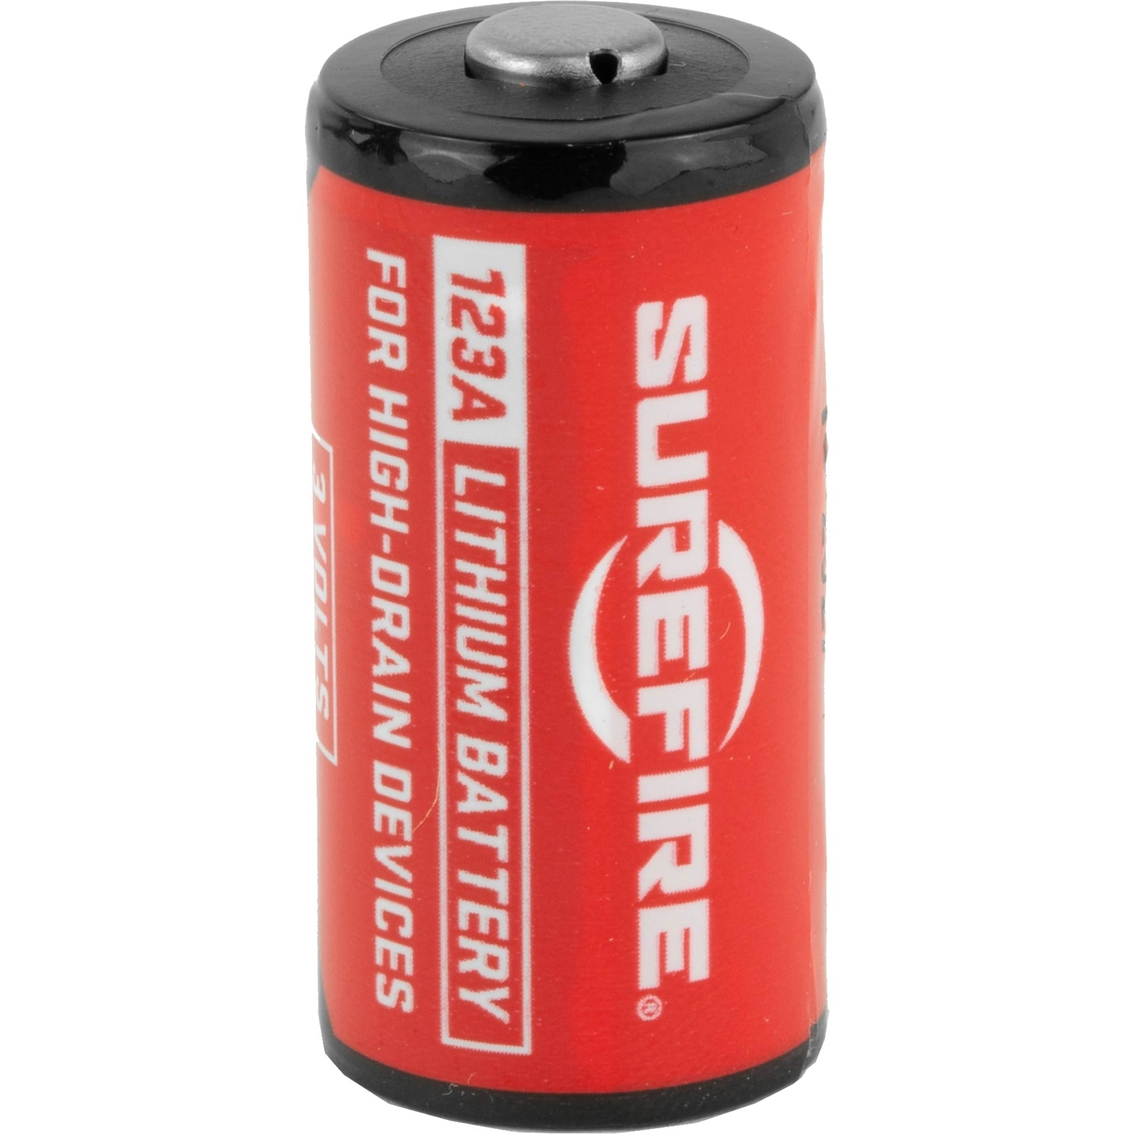 Surefire CR123A Lithium Battery 12 pk. - Image 3 of 3